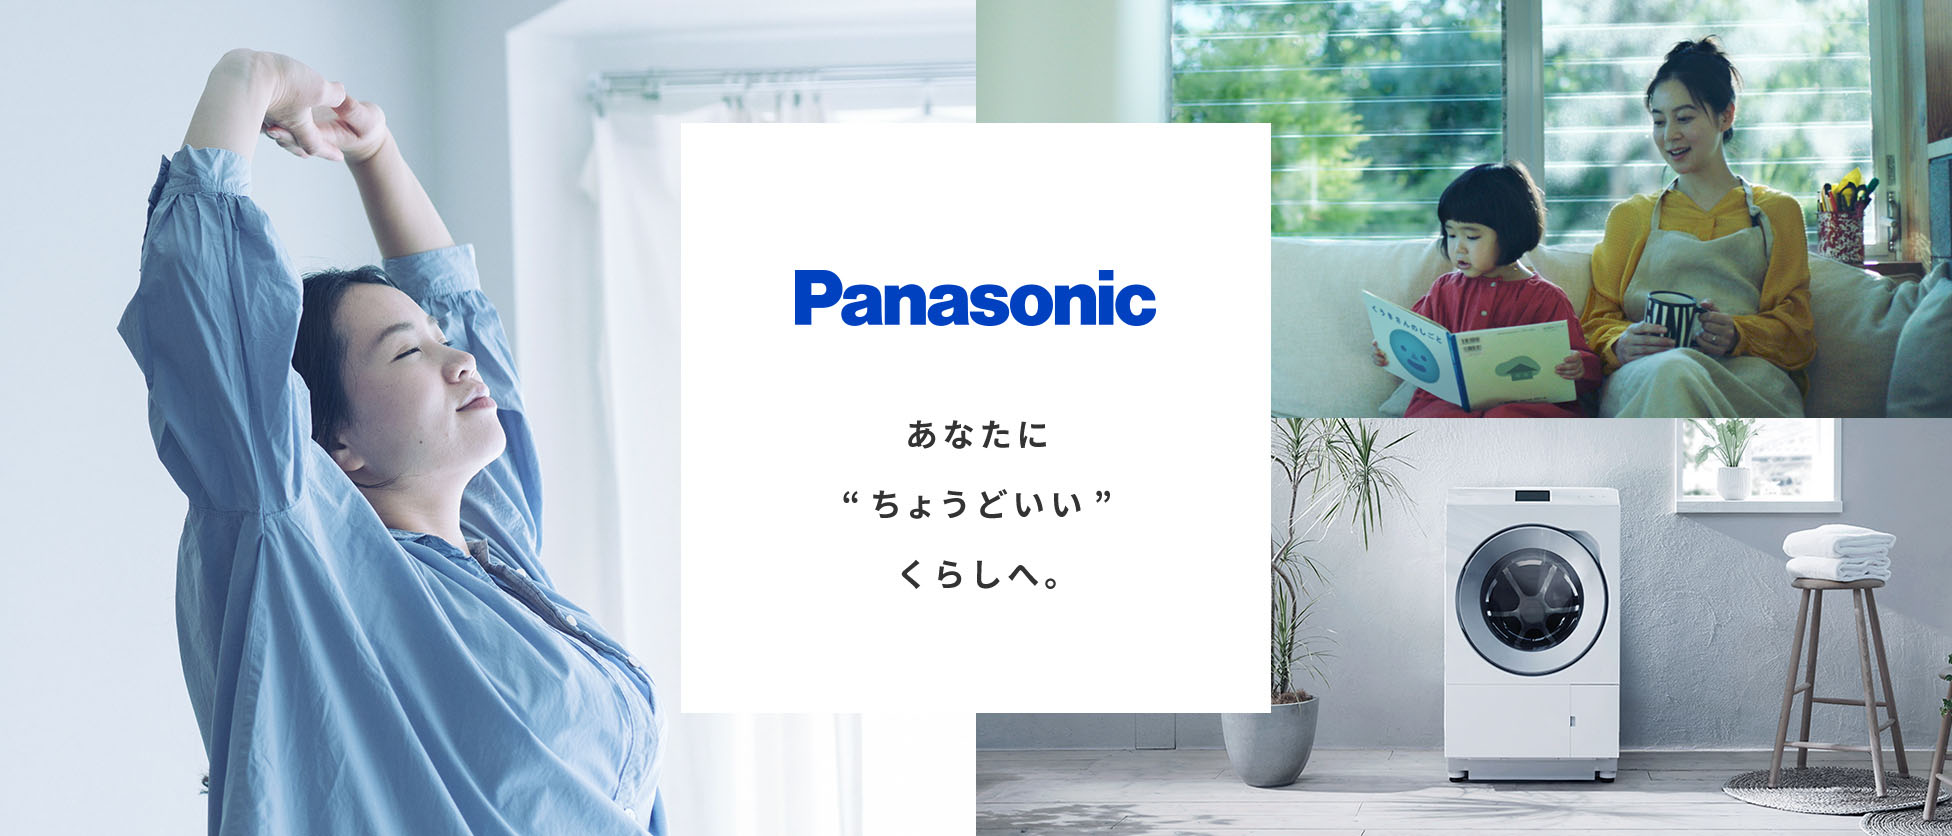 Panasonic あなたに"ちょうどいい"くらしへ。個人向け商品